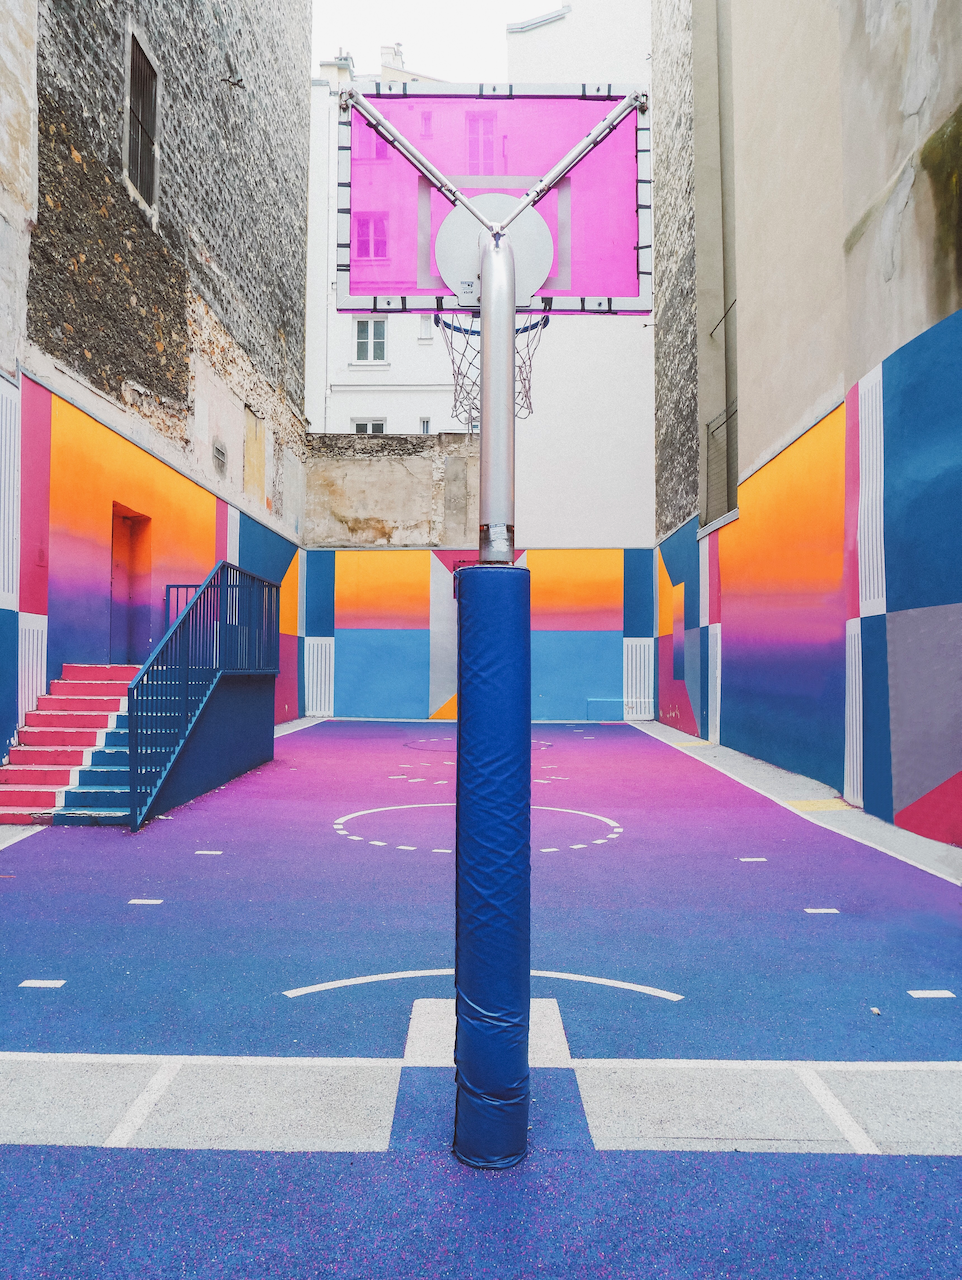 Colourful Duperré Playground for basketball - Montmartre - Paris - France